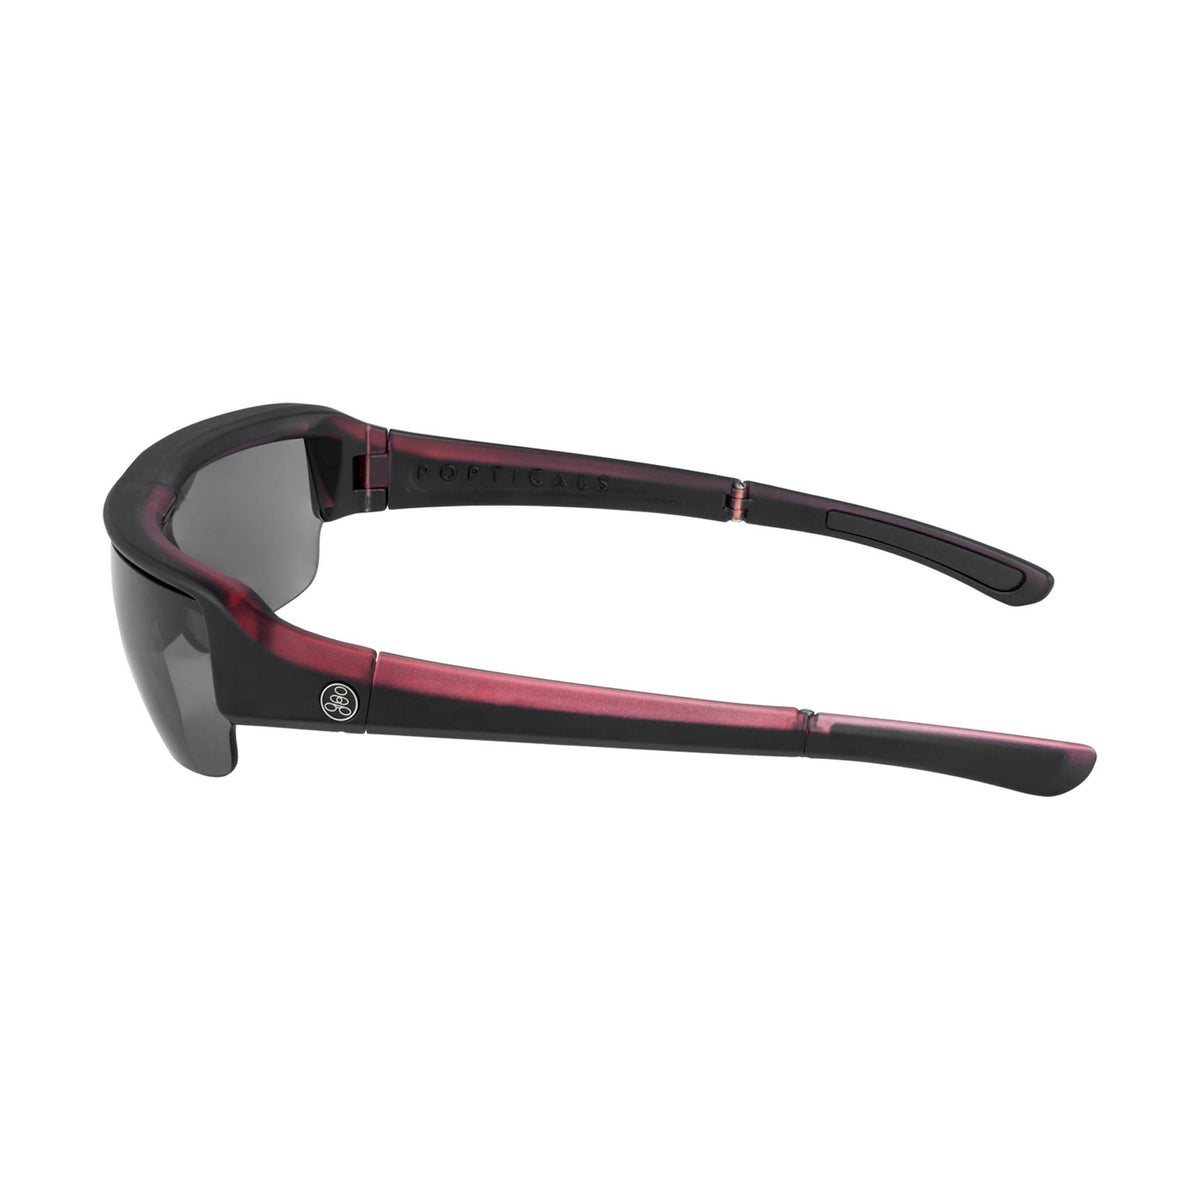 Popticals, Premium Compact Sunglasses, PopGun, 030010-REGP, Polarized Sunglasses, Matte Red/Black Crystal Frame, Gray Lenses, Side View